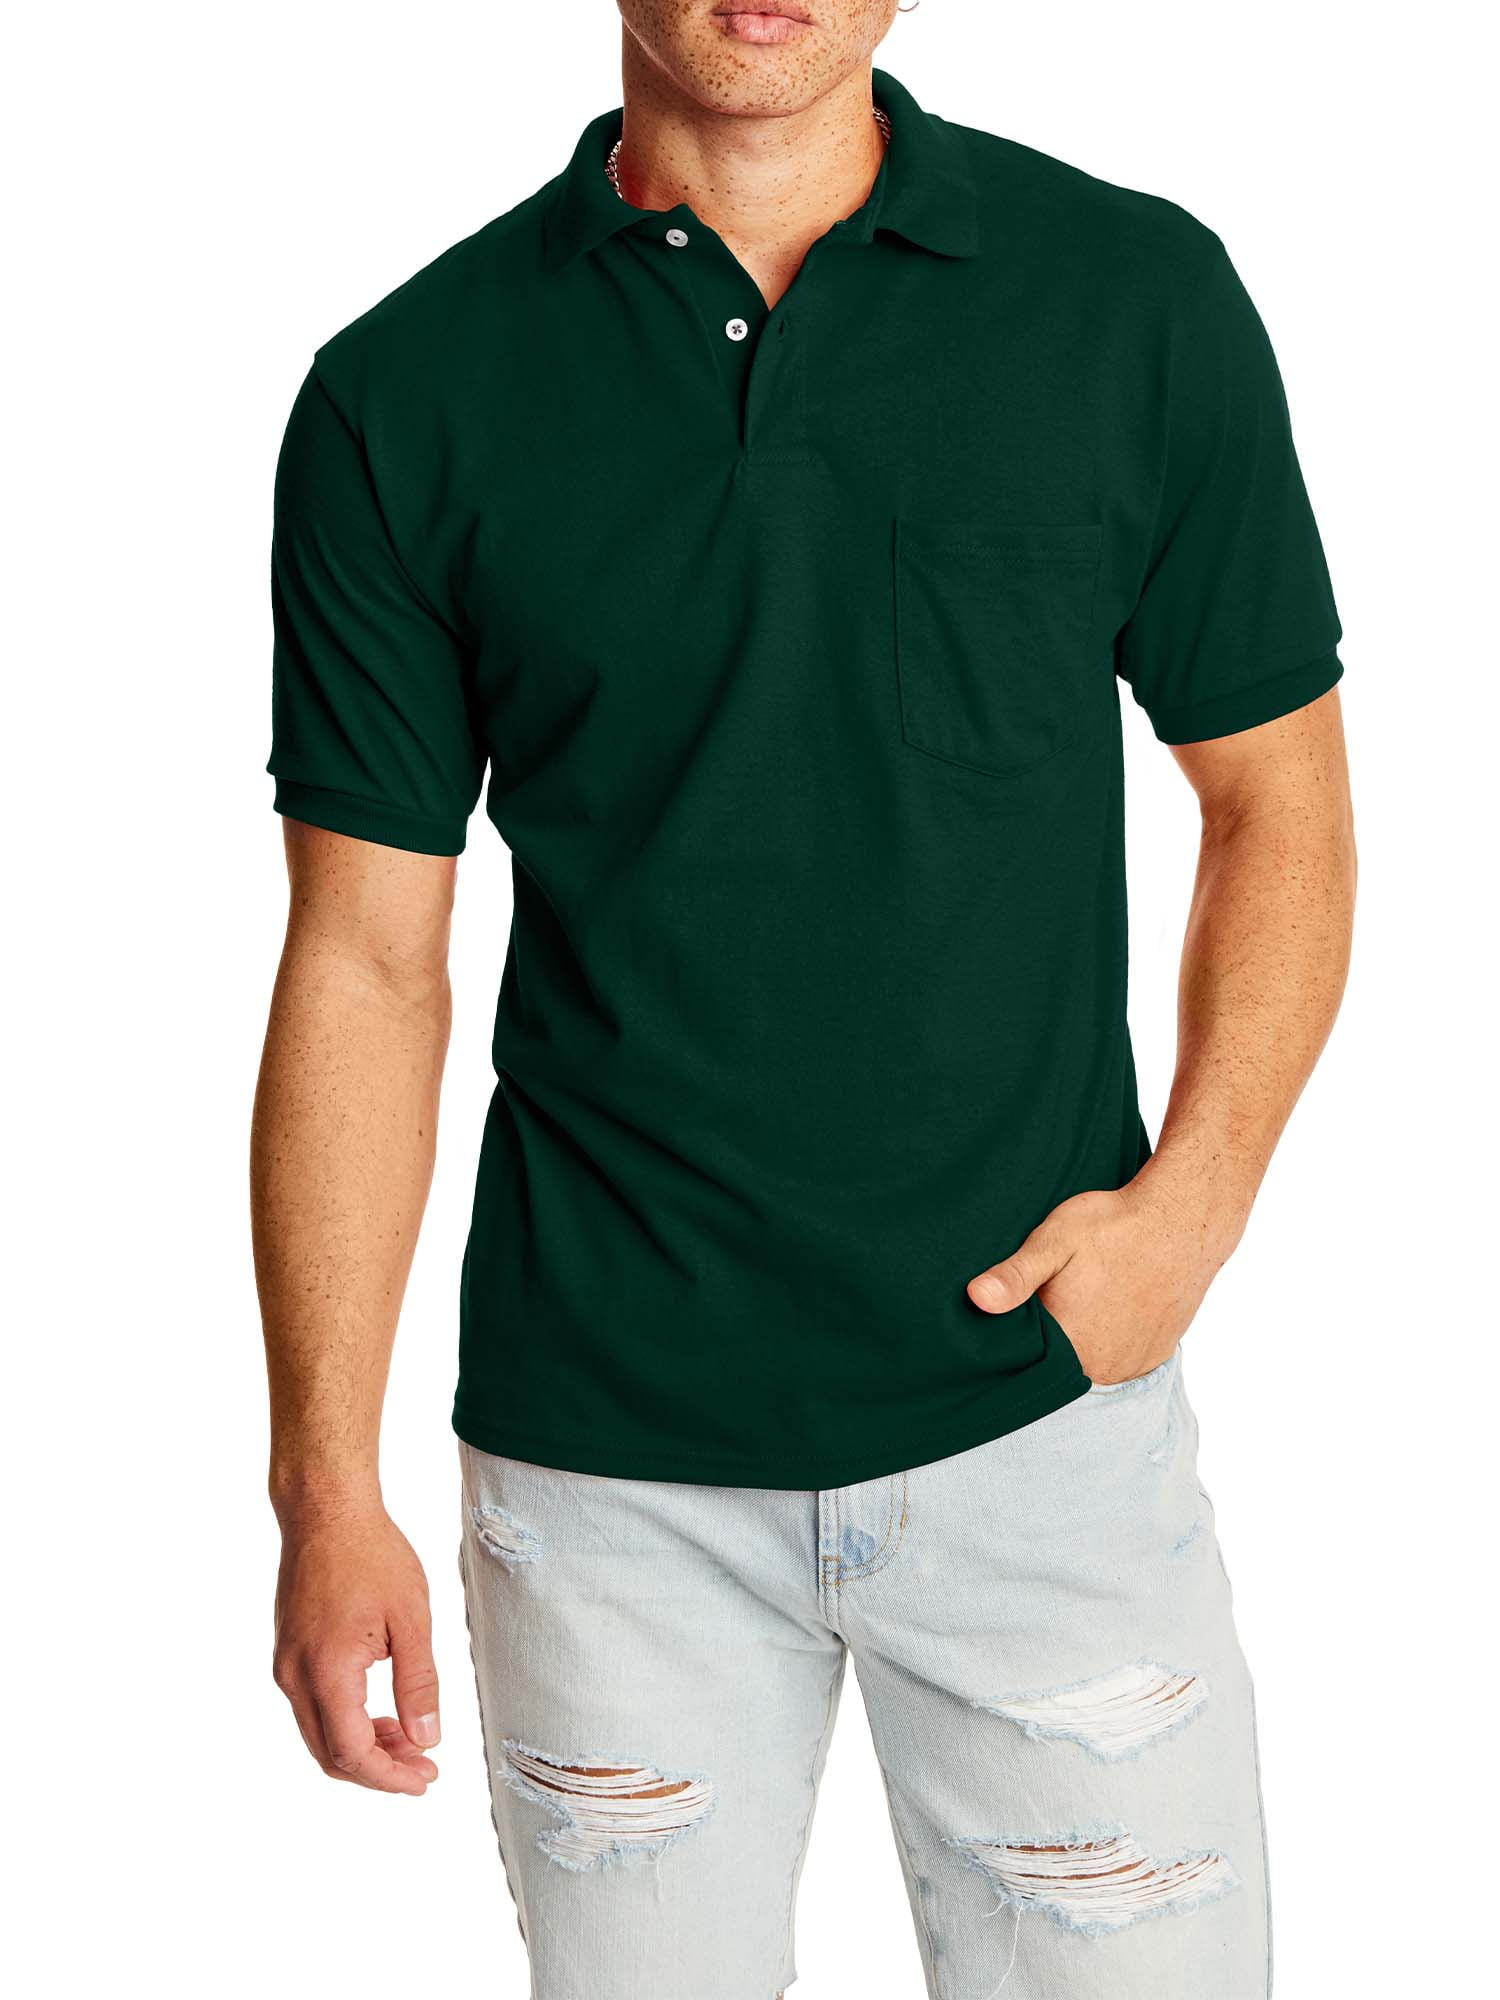 Hanes Men's S/s Jersey Sportshirt W/Pocket 